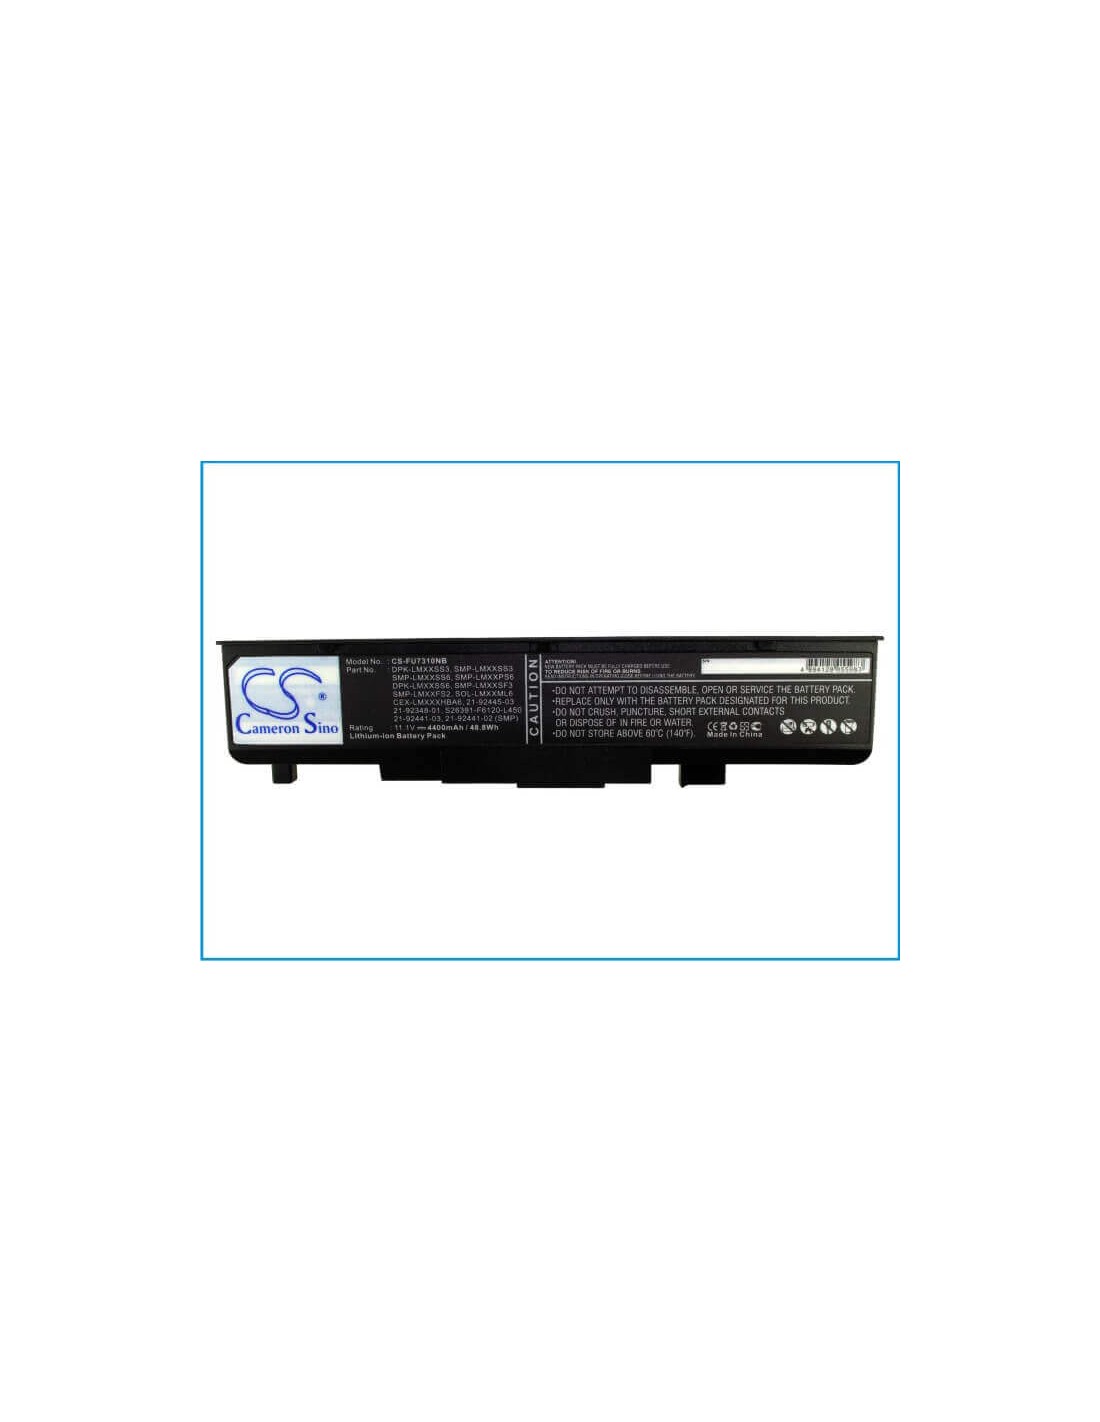 Black Battery for Everex Stepnote Nc1500, Stepnote Nc1501, Stepnote Nc1502 11.1V, 4400mAh - 48.84Wh